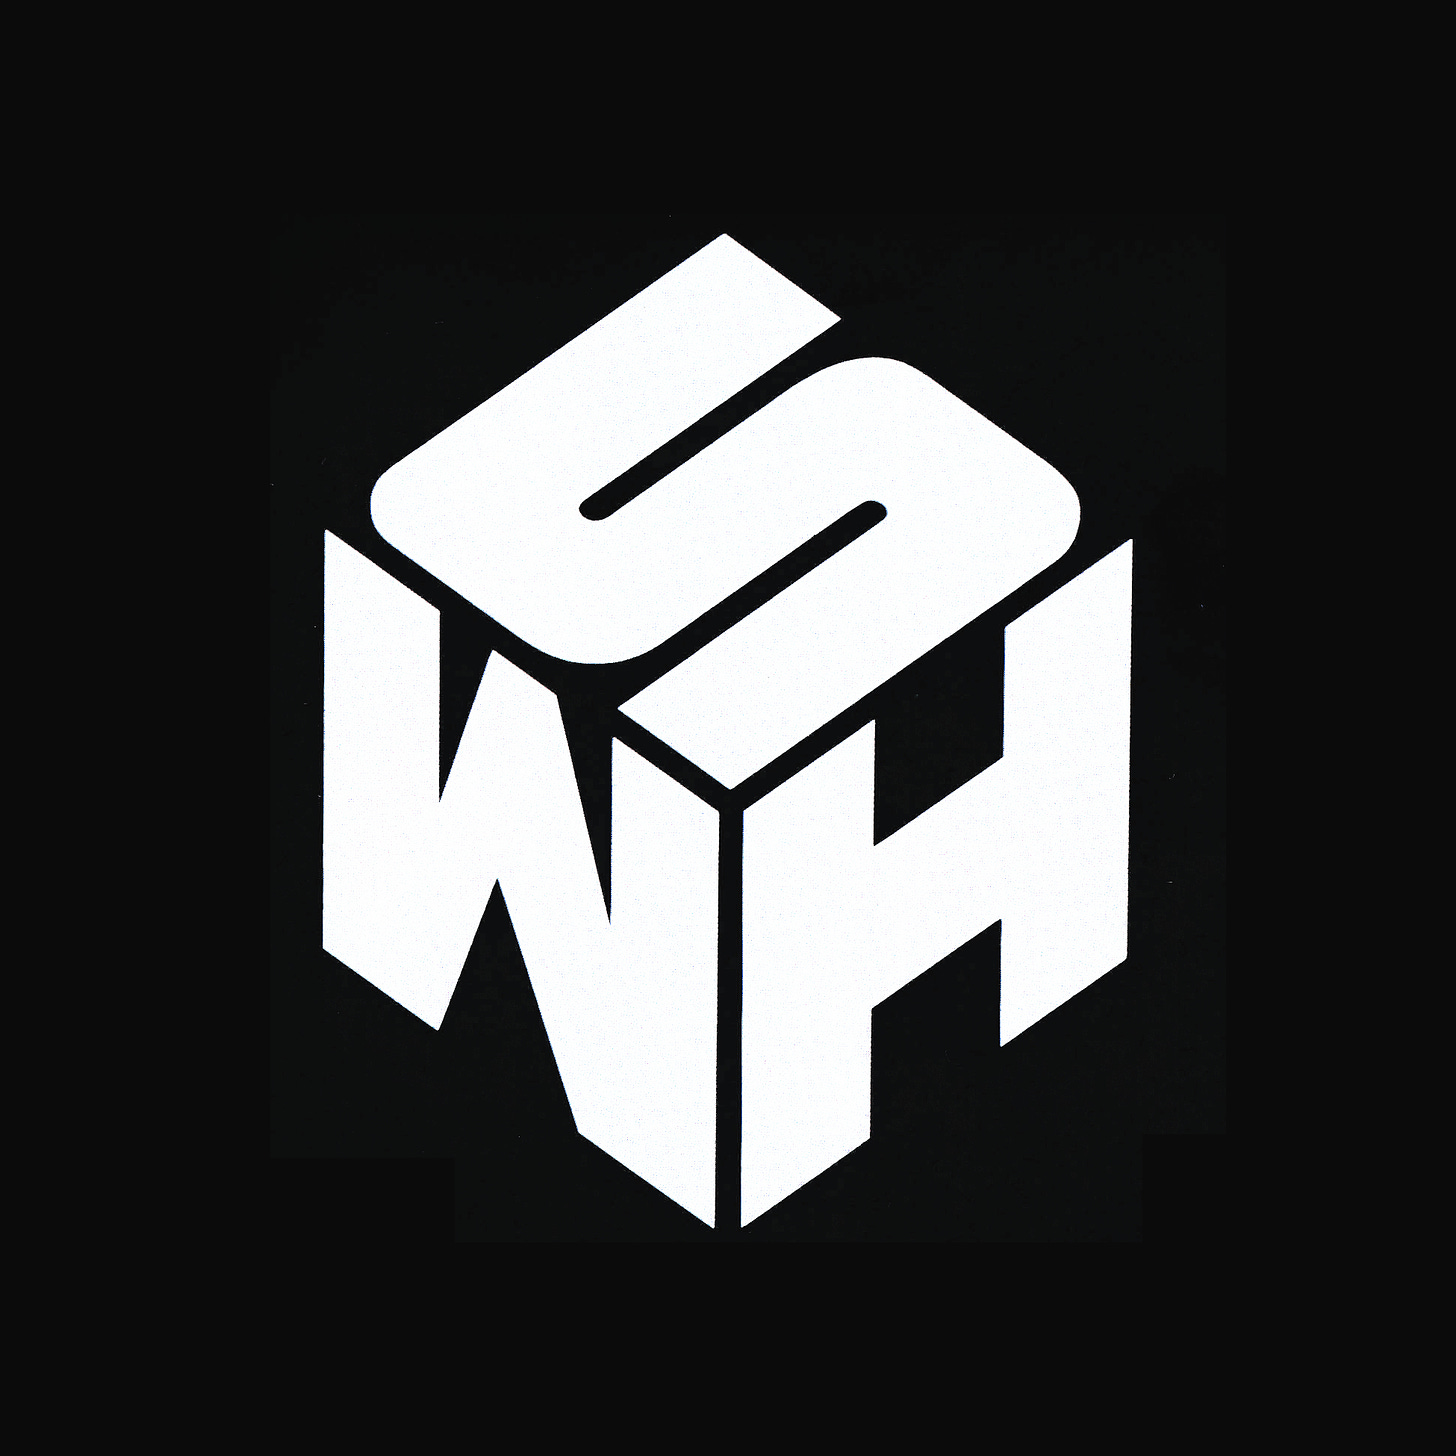 WhSmith 1970s logo design history, LogoArchive